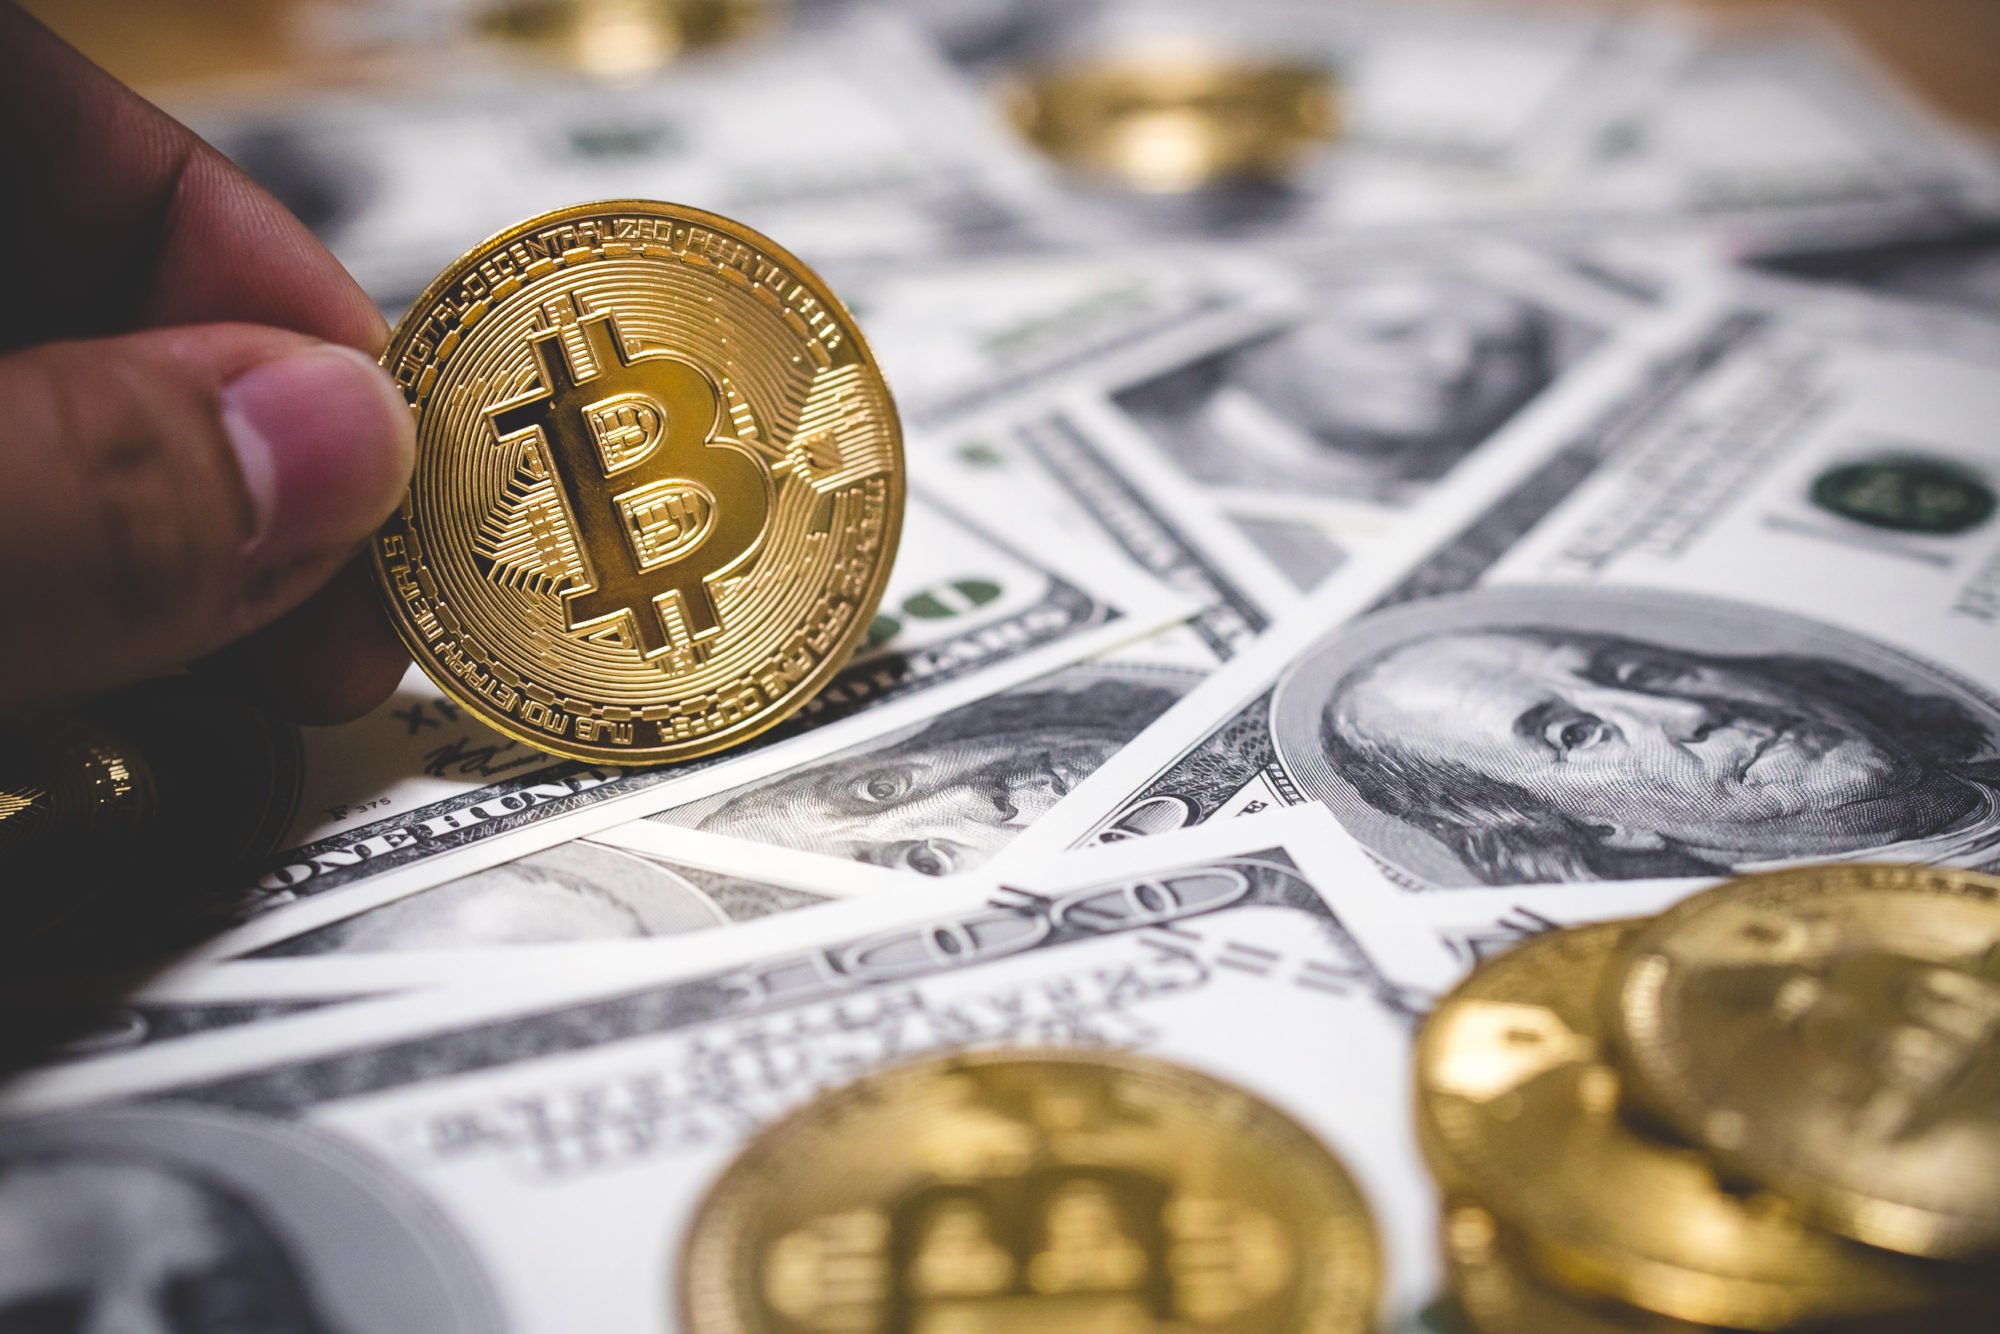 Fundstrat: Bitcoin Fundamentals Should Turn Positive Over 2019